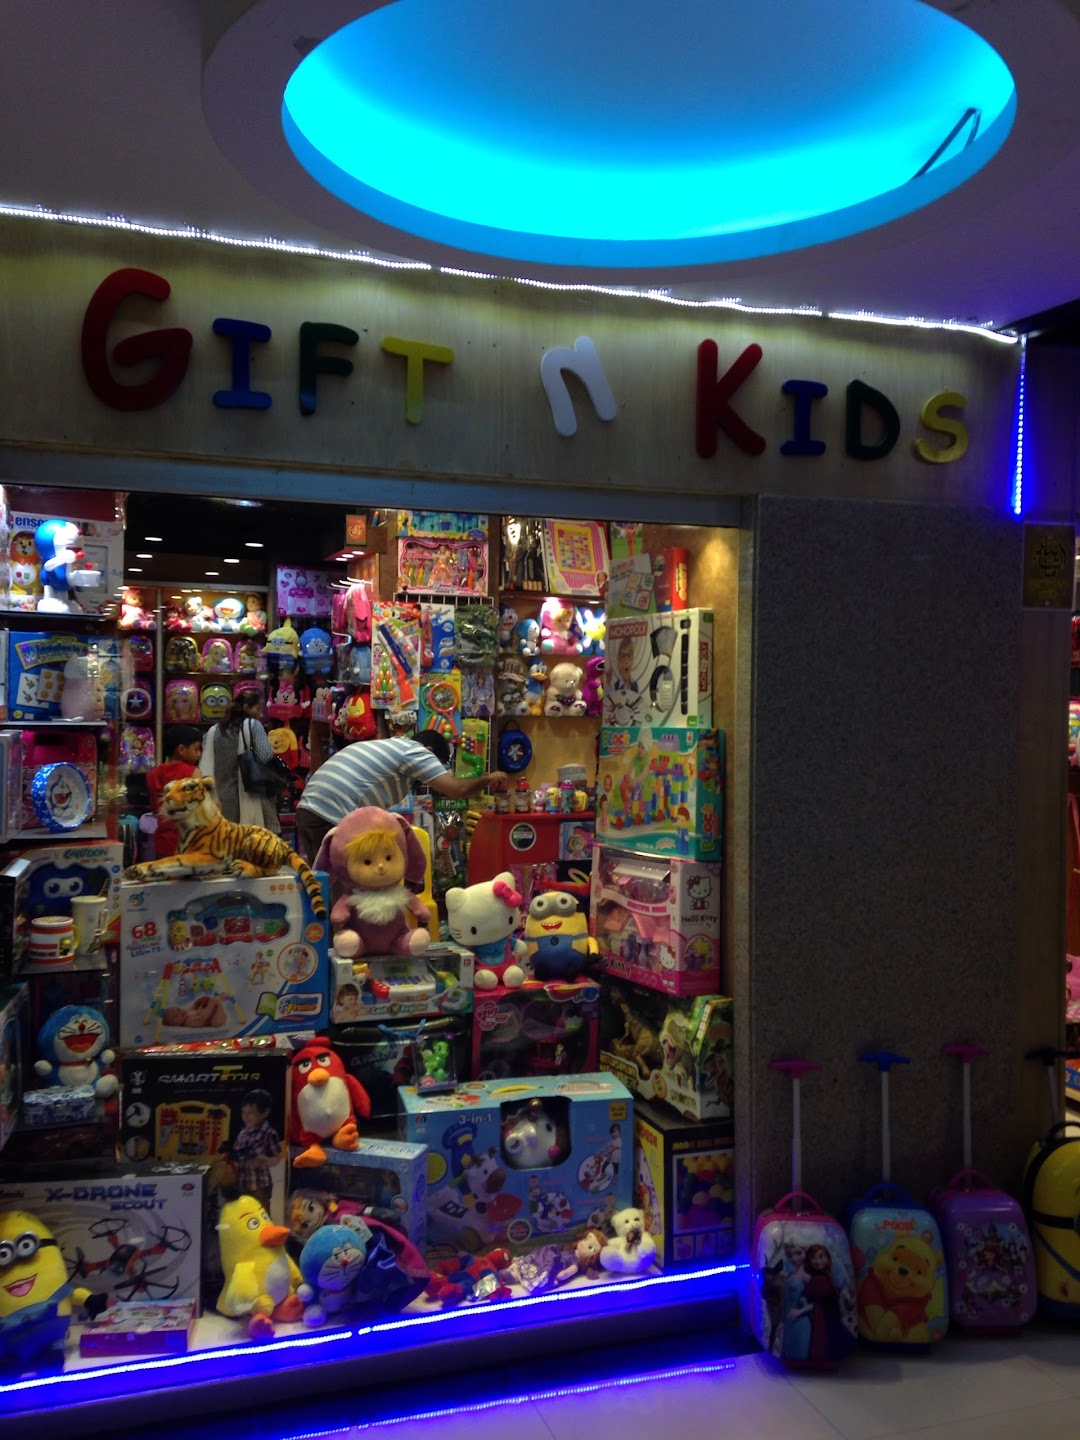 Gift n Kids